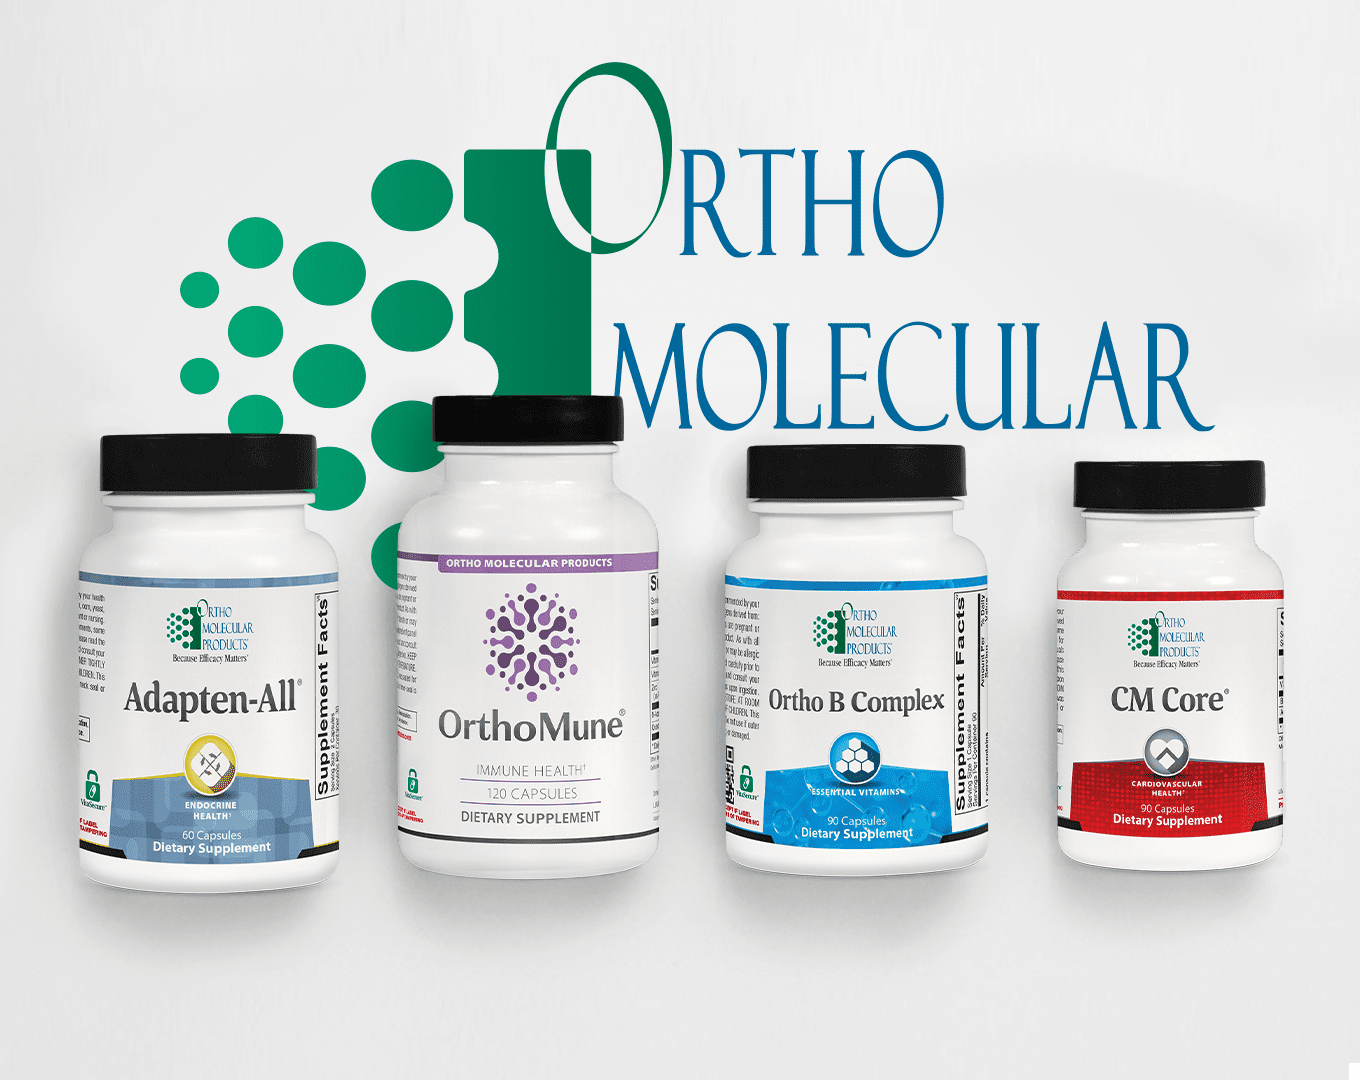 ORTHO MOLECULAR Medical Grade Supplements